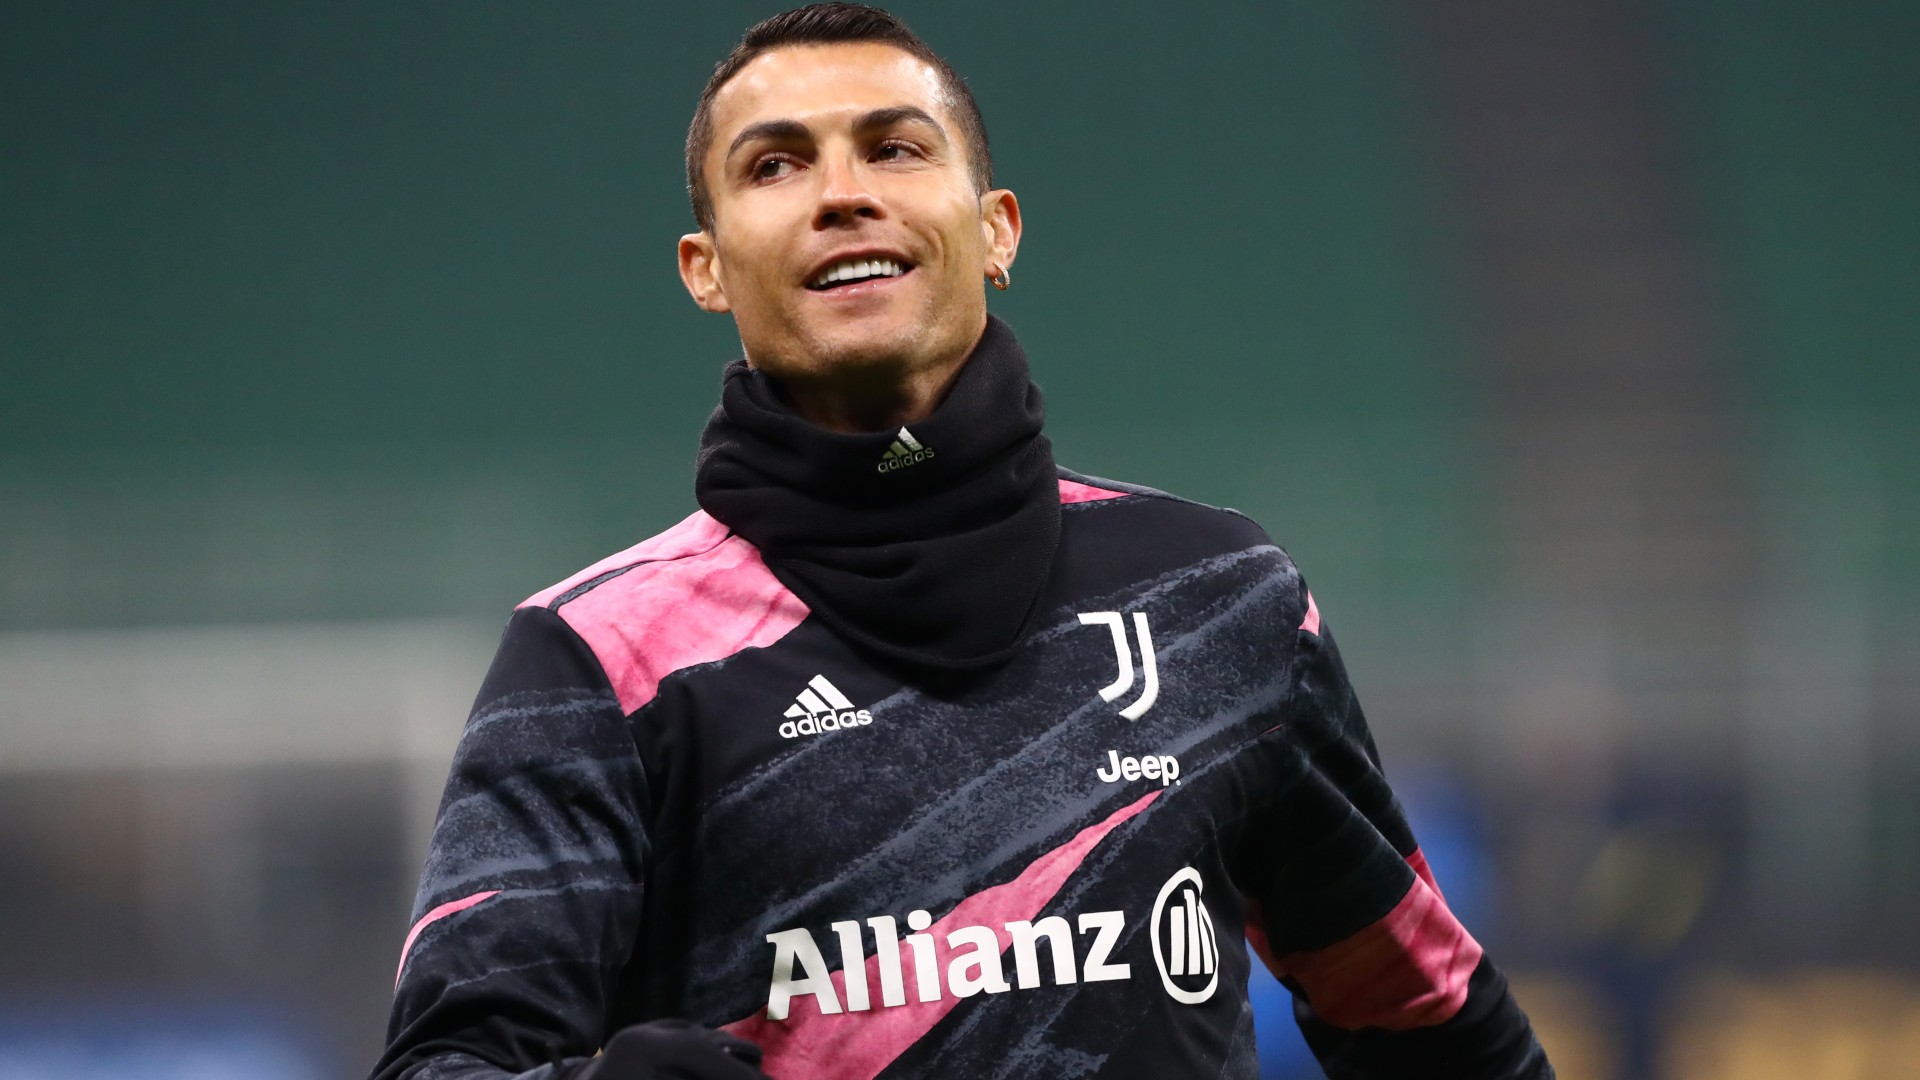 Juventus superstar Ronaldo under investigation for potential Covid-19 rule breach to take birthday ski trip